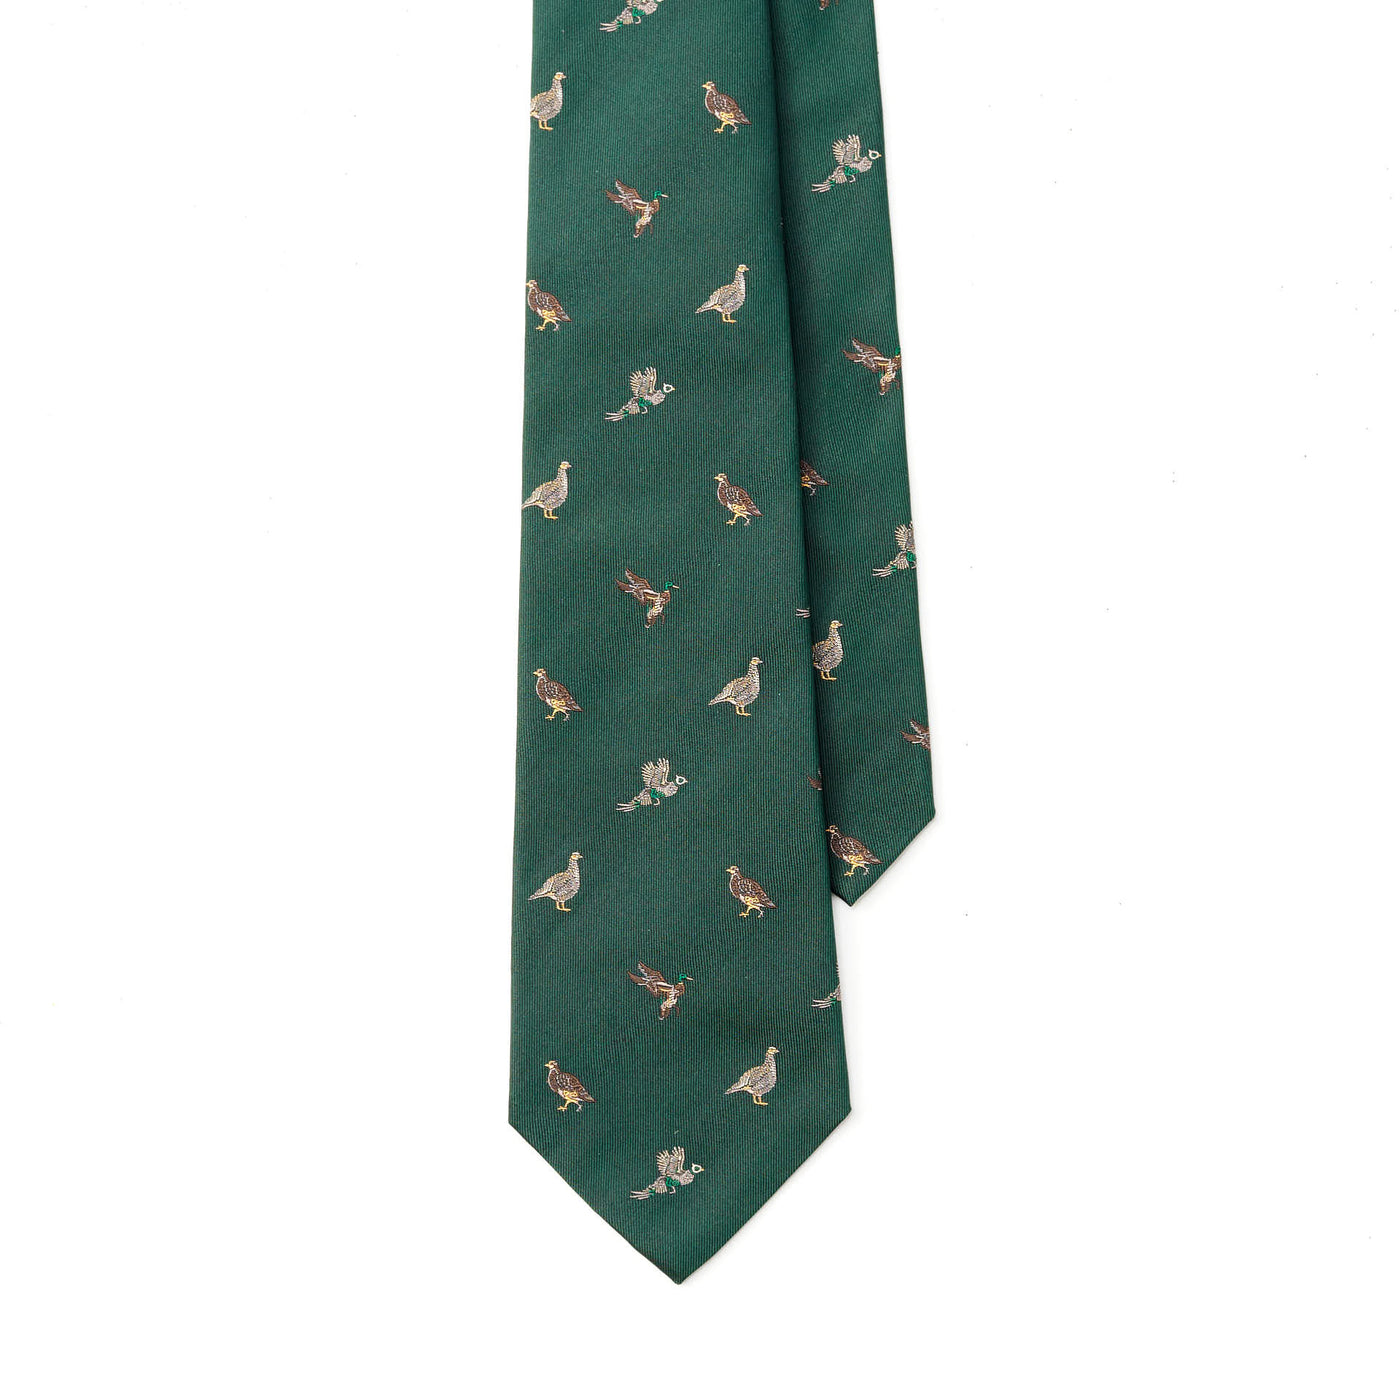 Shop Multi Fowl dark green Tie | Beretta Gallery USA